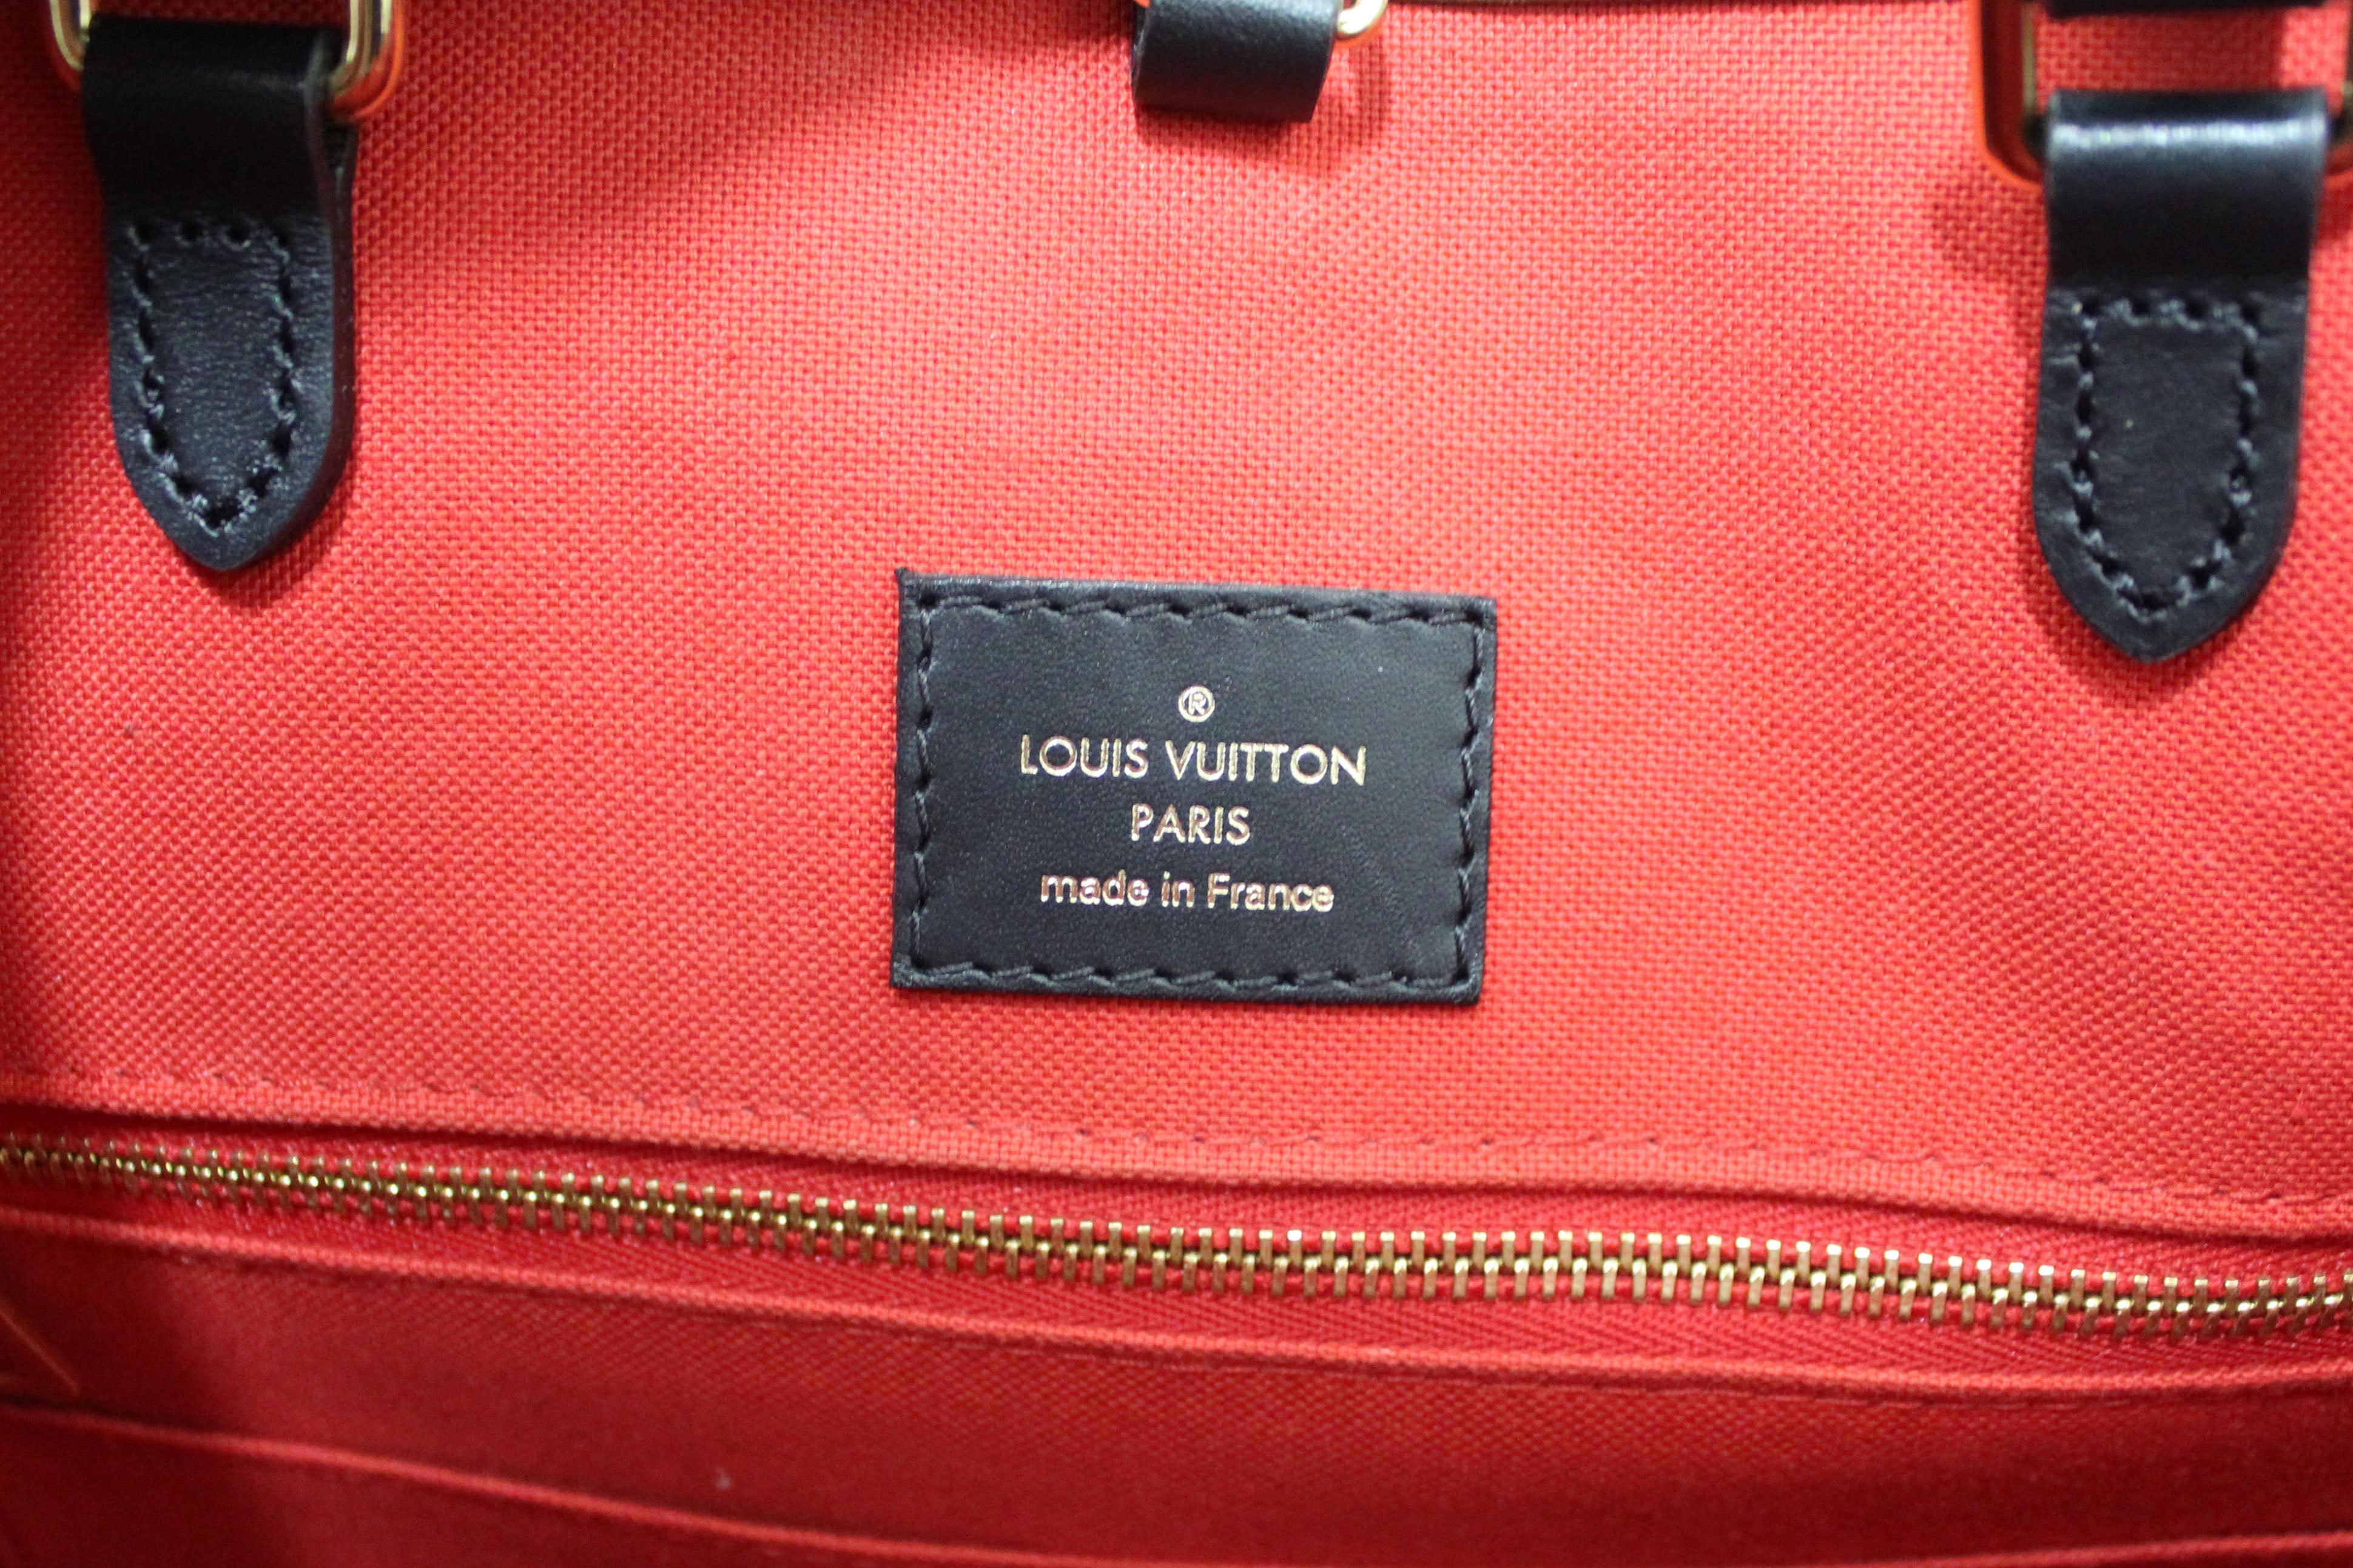 Authentic Louis Vuitton OnTheGo MM Monogram Tote bag